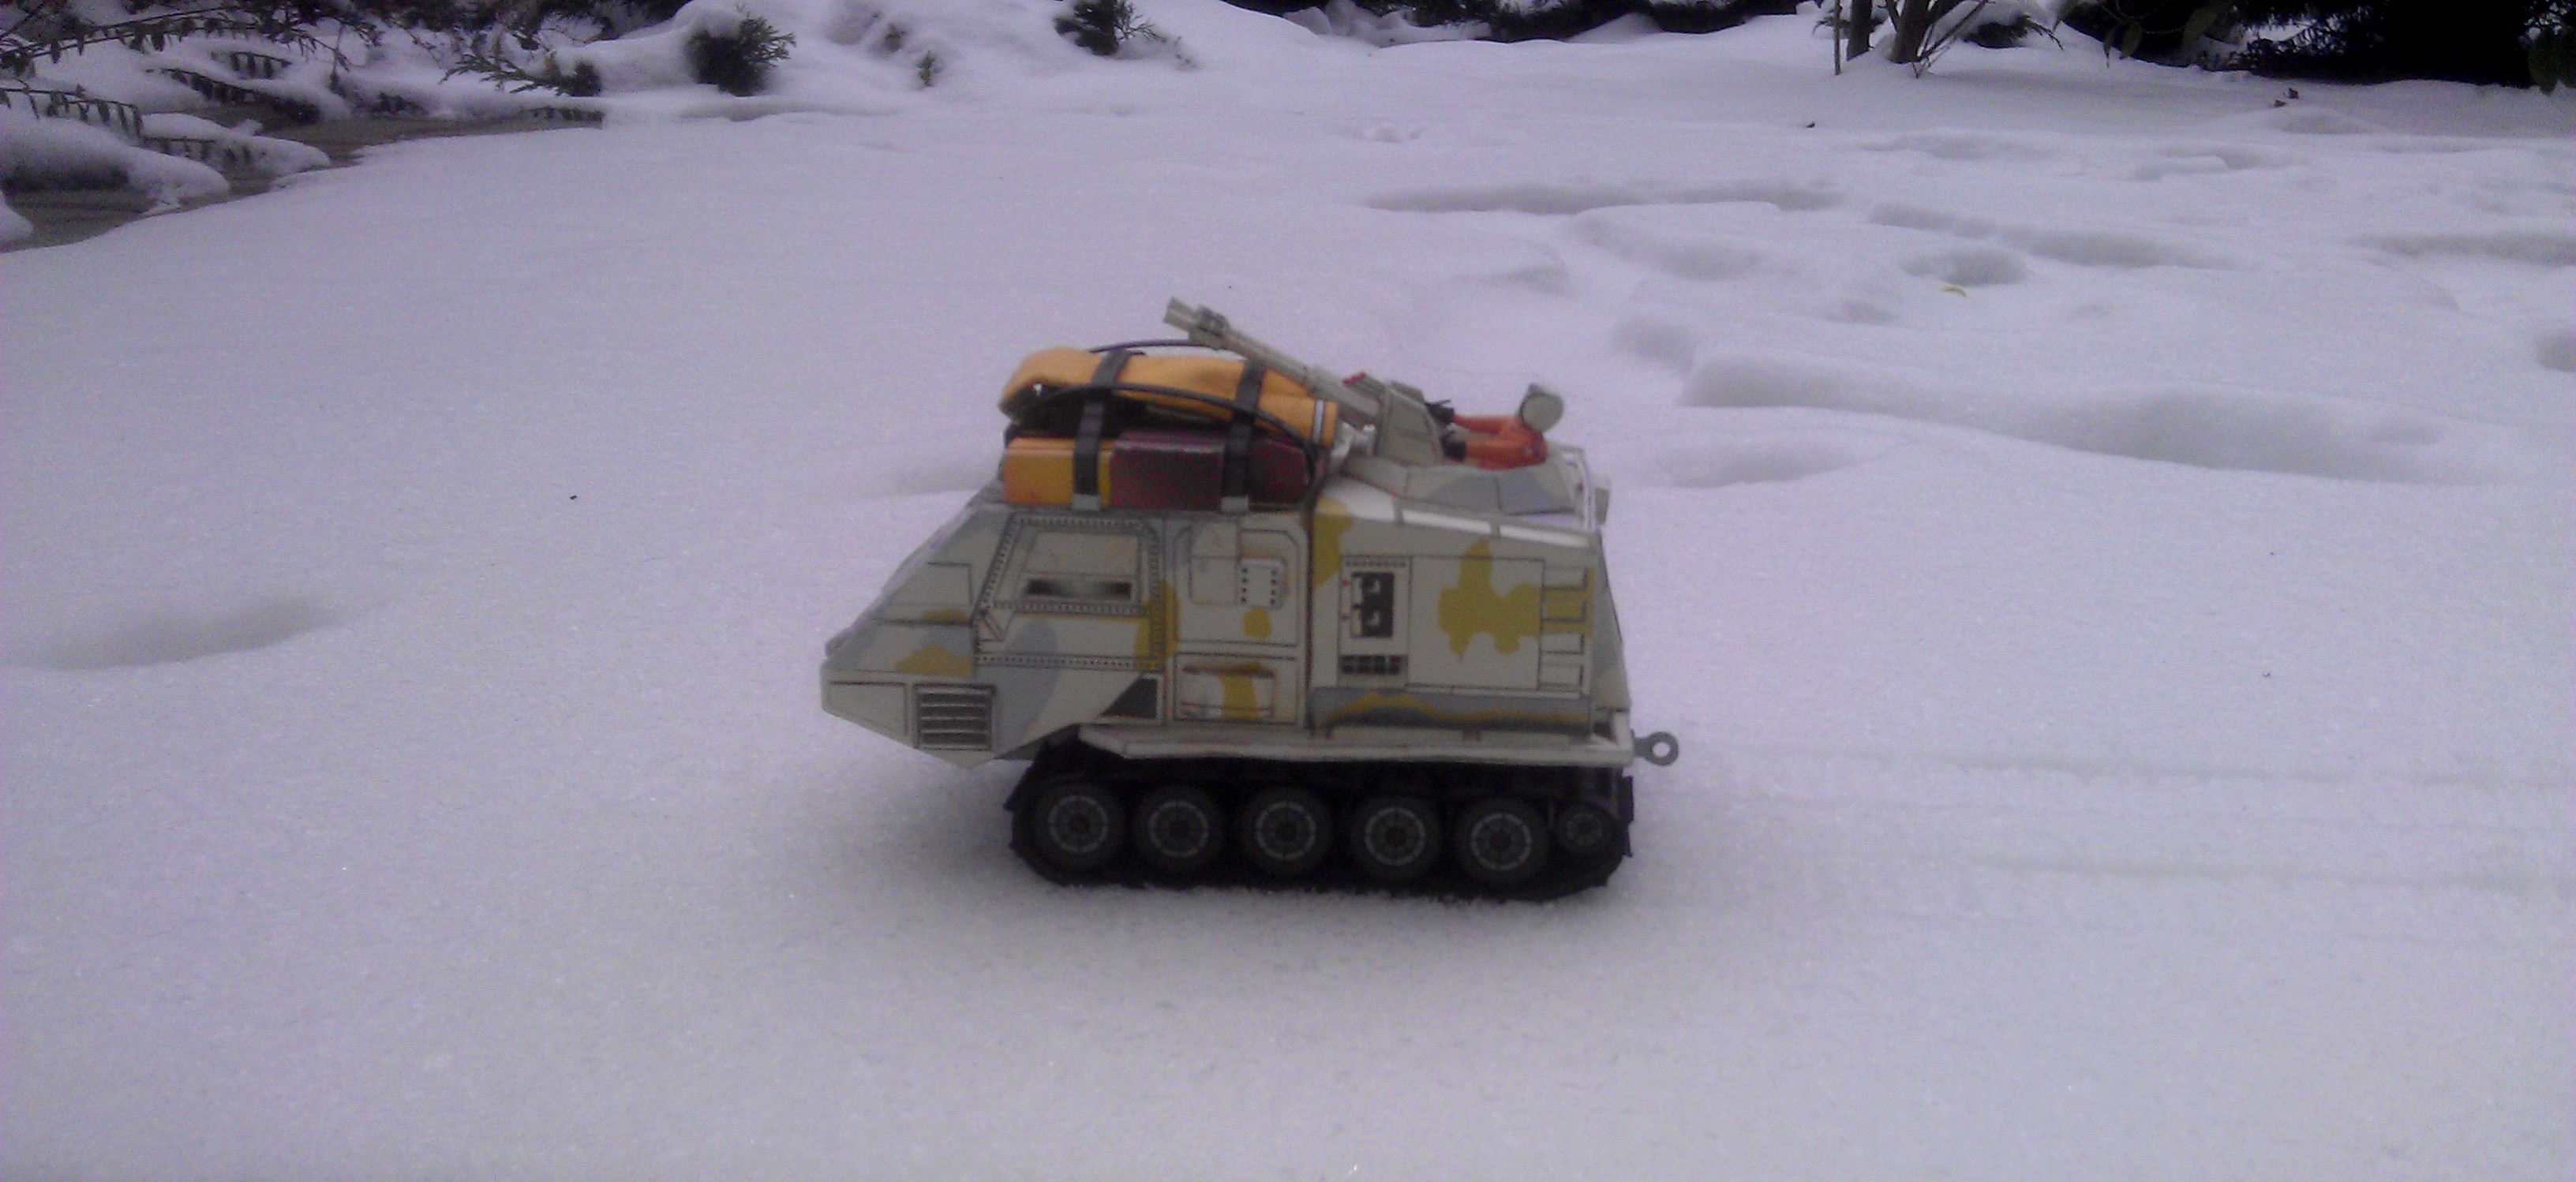 BSG Snowram In the Snow!!!